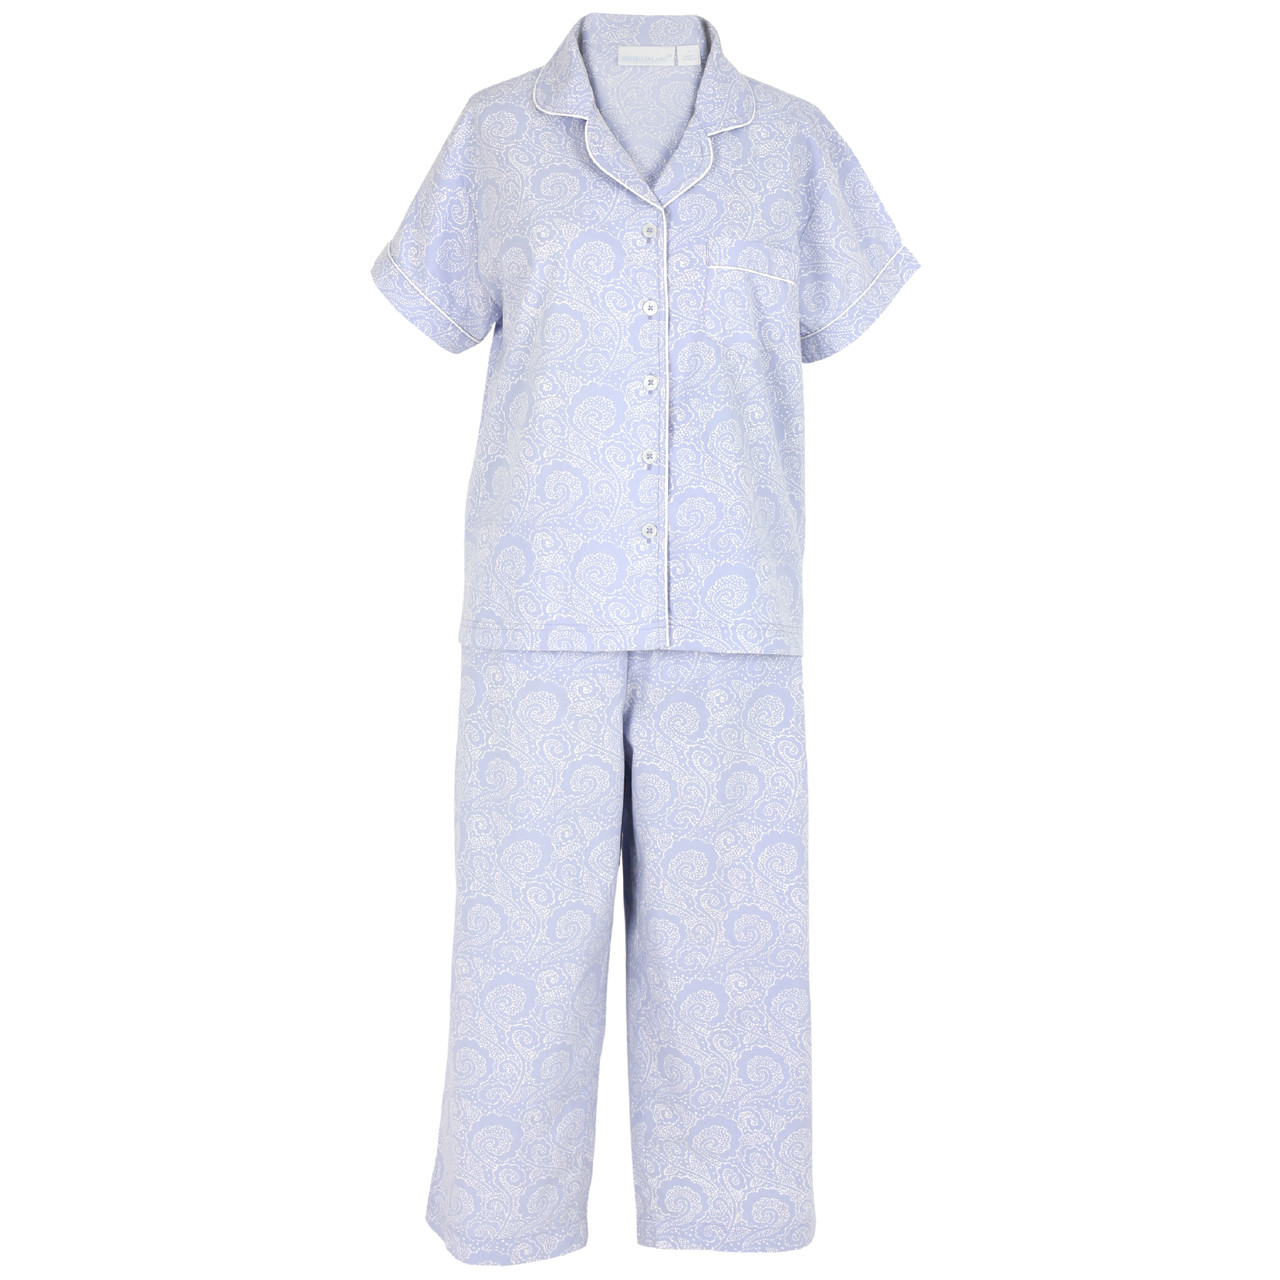 VENTELAN Pajamas For Women Short Sleeve Capri Pajama Set Soft